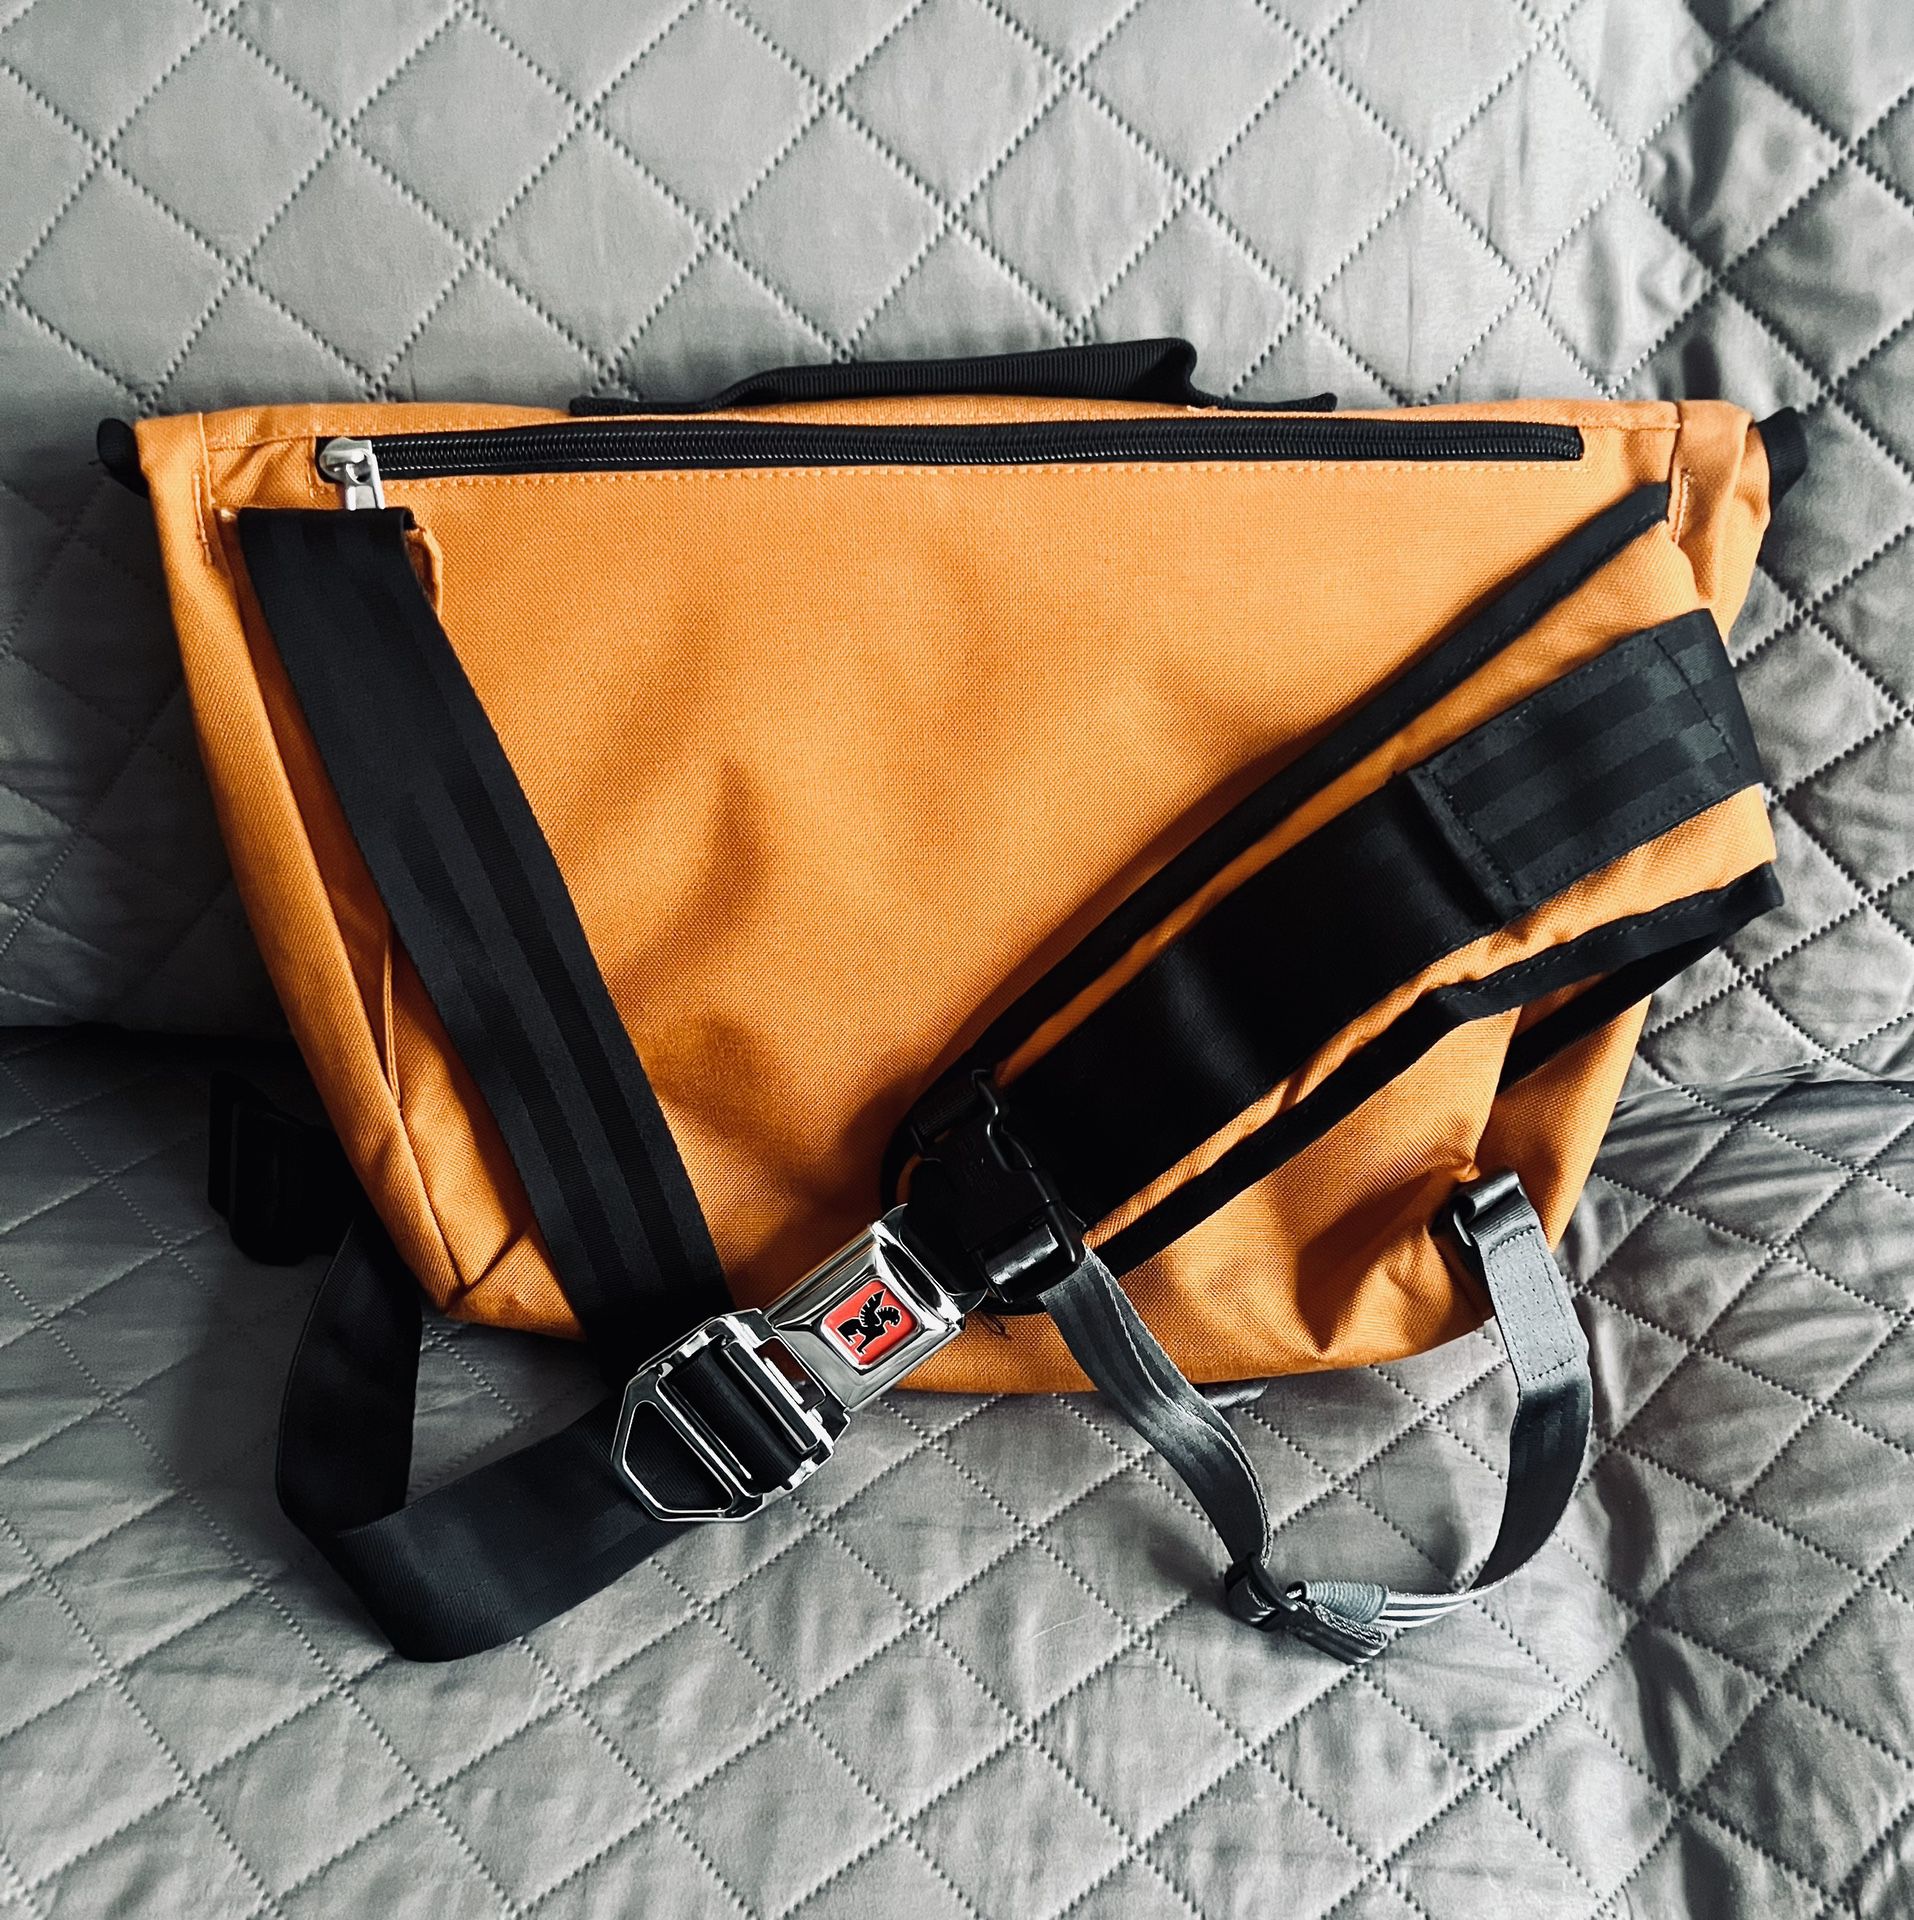 Chrome citizen messenger cross body bag with seat belt buckle in orange